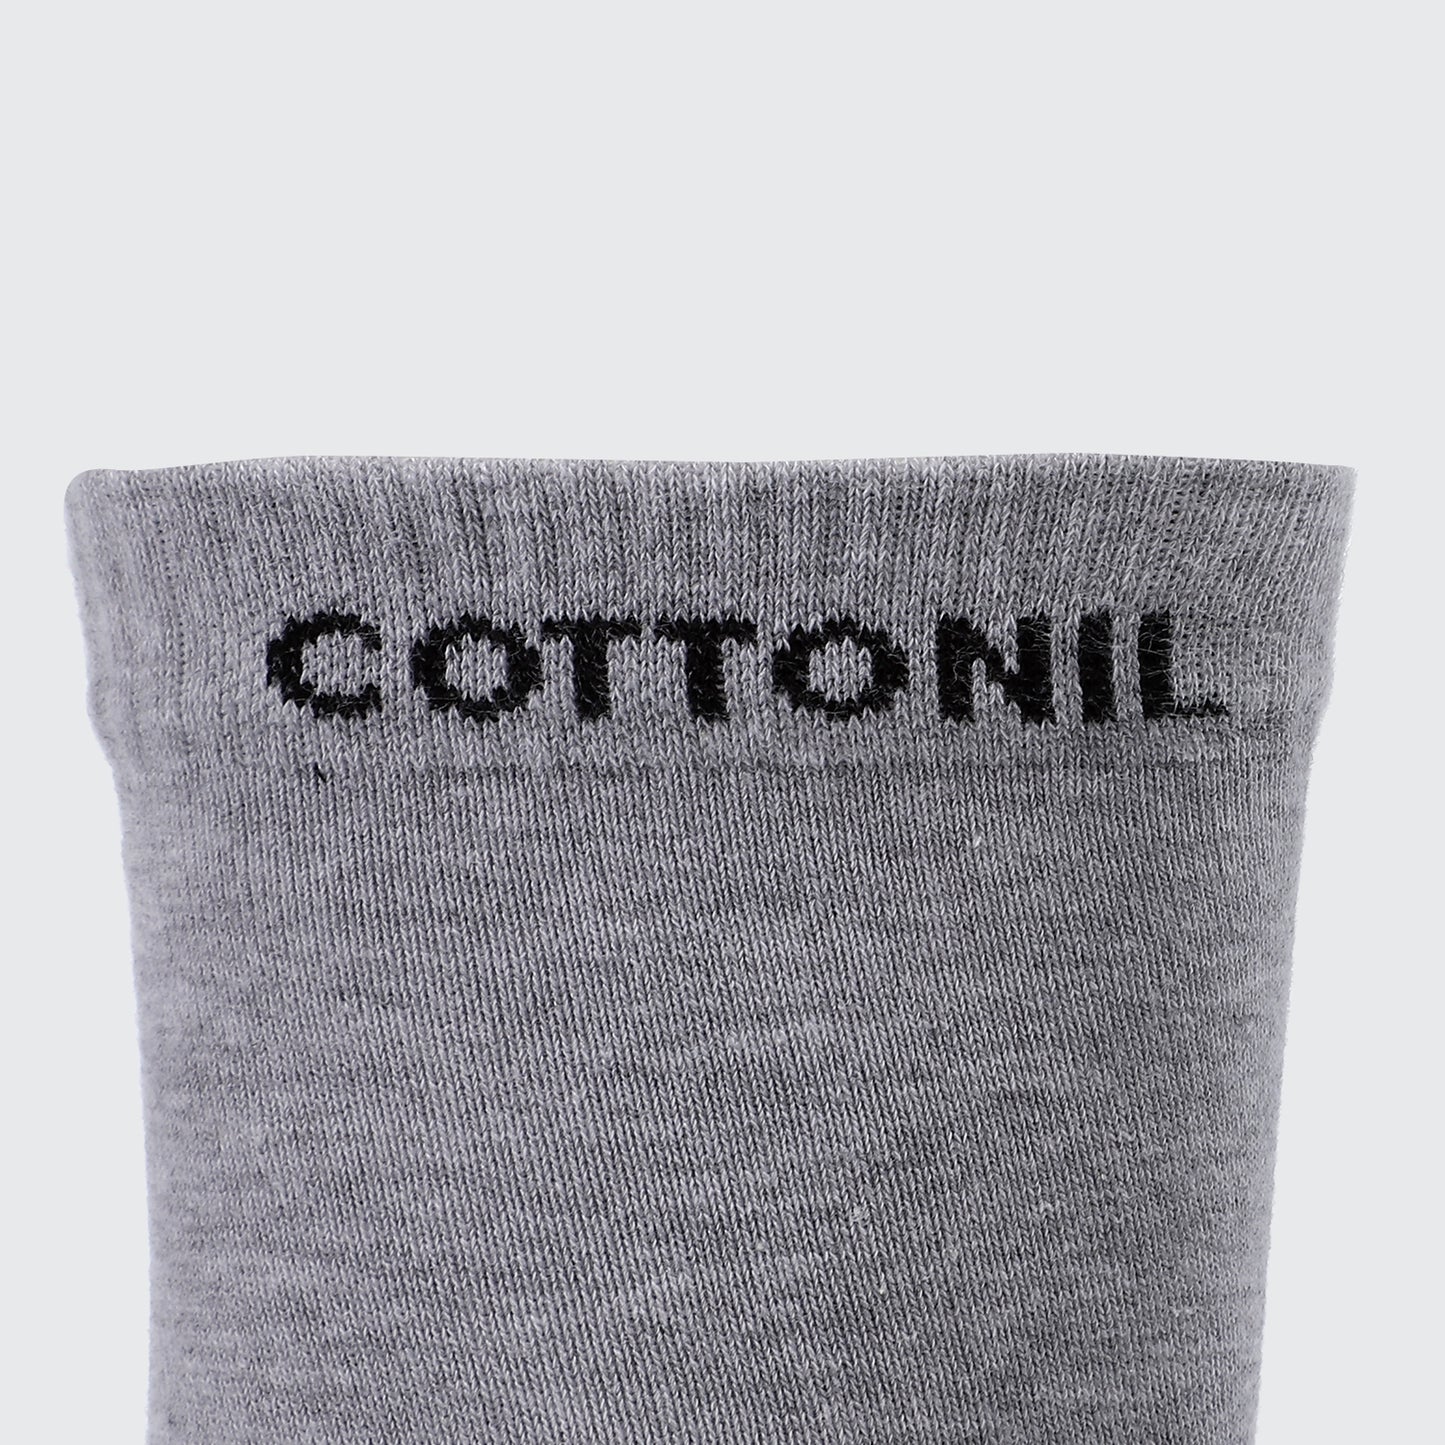 Sportive Cotton Mid Calf Men Socks - Pack Of 6